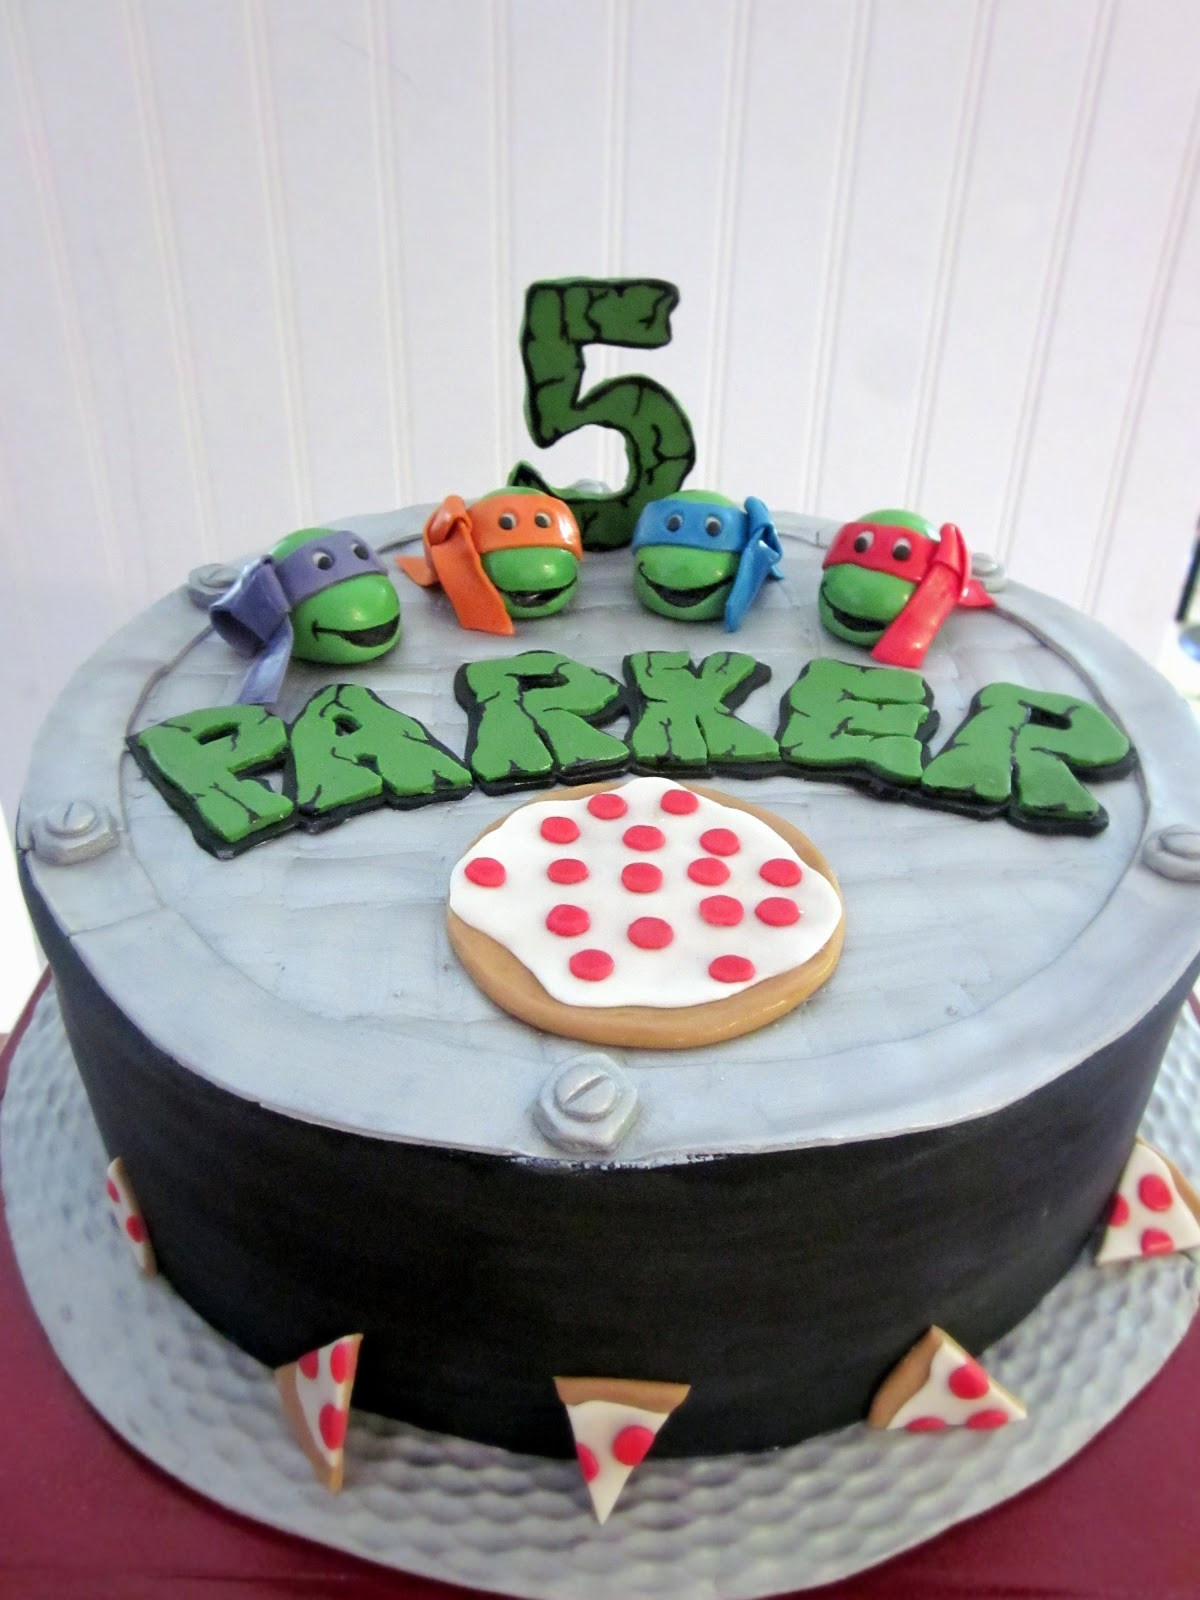 Best ideas about Teenage Mutant Ninja Turtle Birthday Cake
. Save or Pin Darlin Designs Teenage Mutant Ninja Turtle Birthday Cake Now.